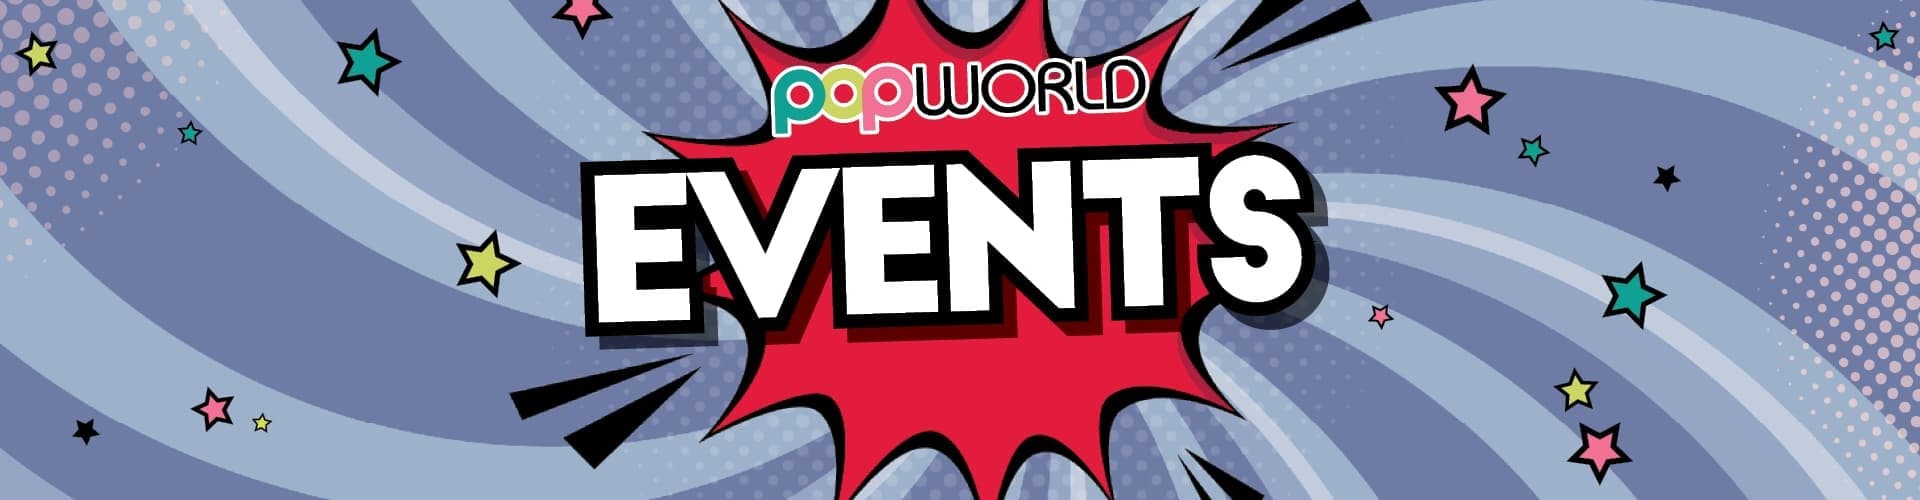 Events at Popworld Newcastle